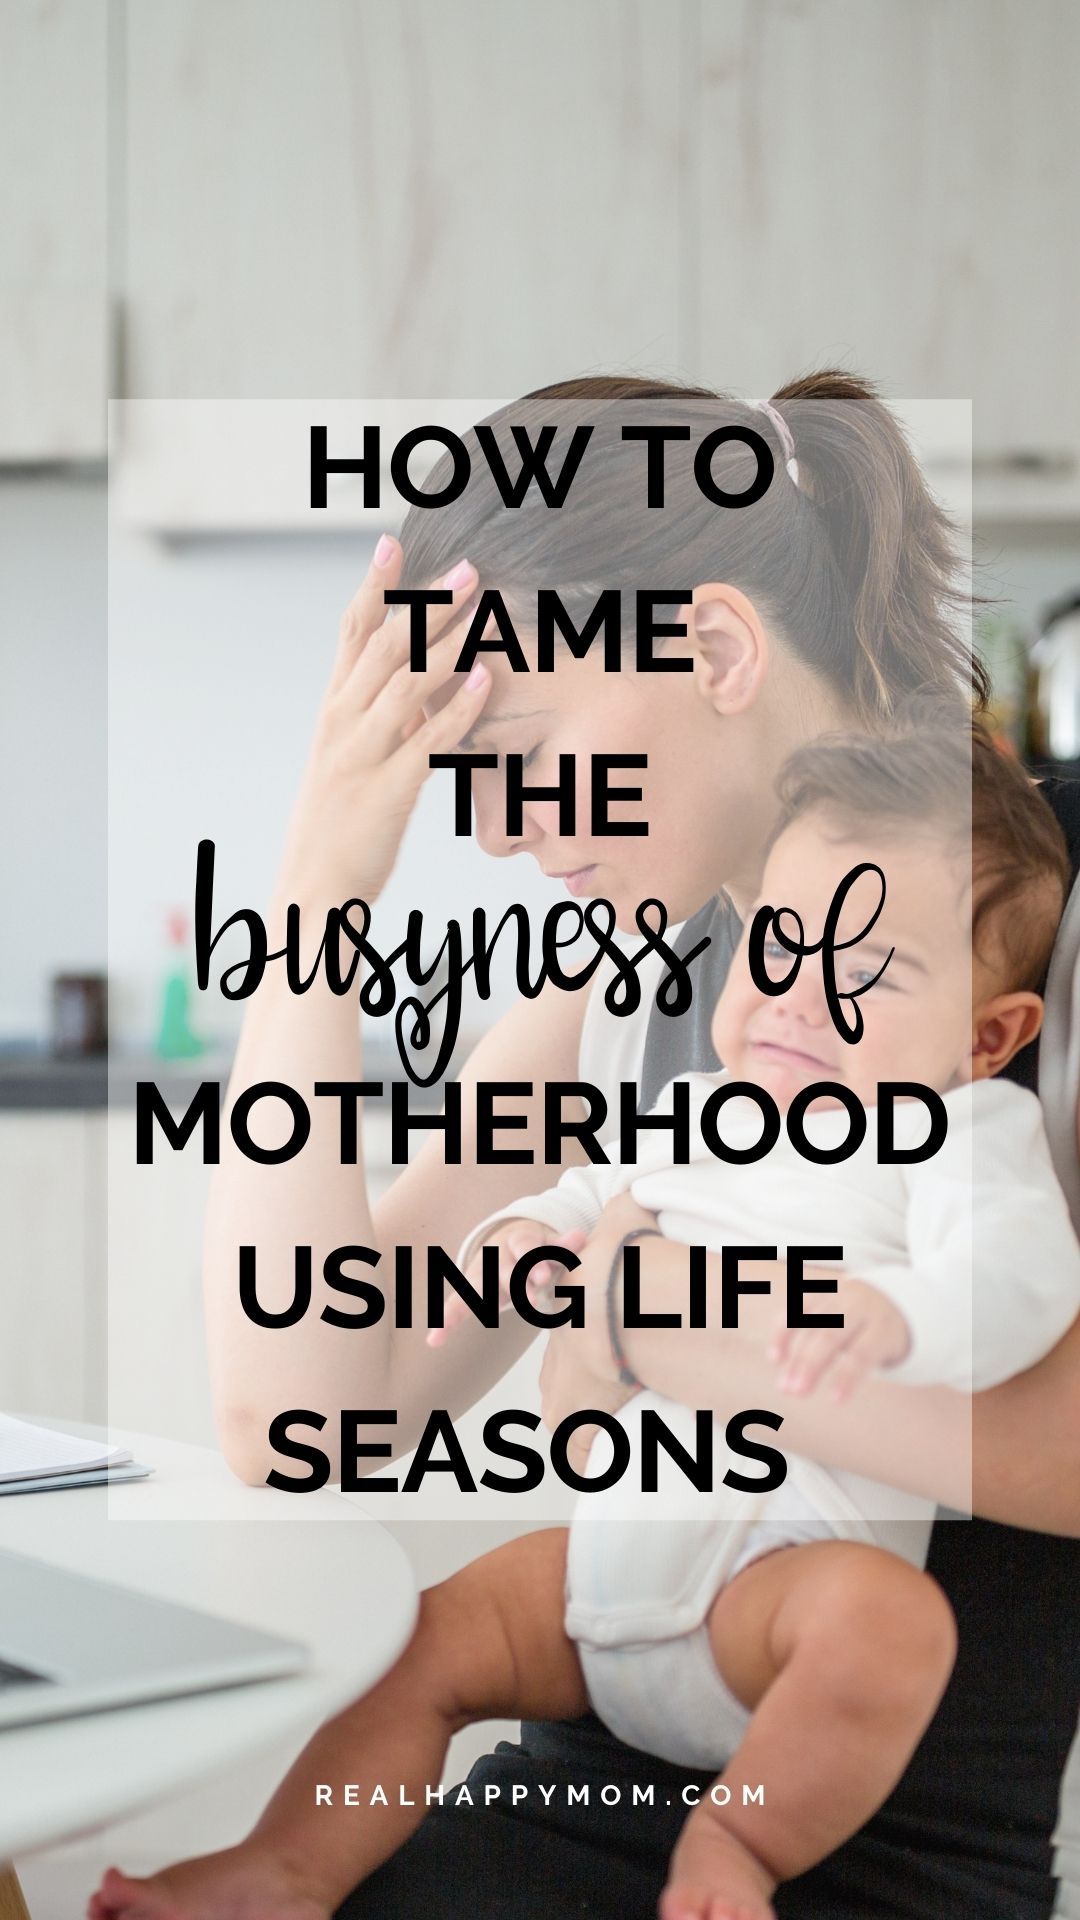 How to Tame the Busyness of Motherhood Using Life Seasons